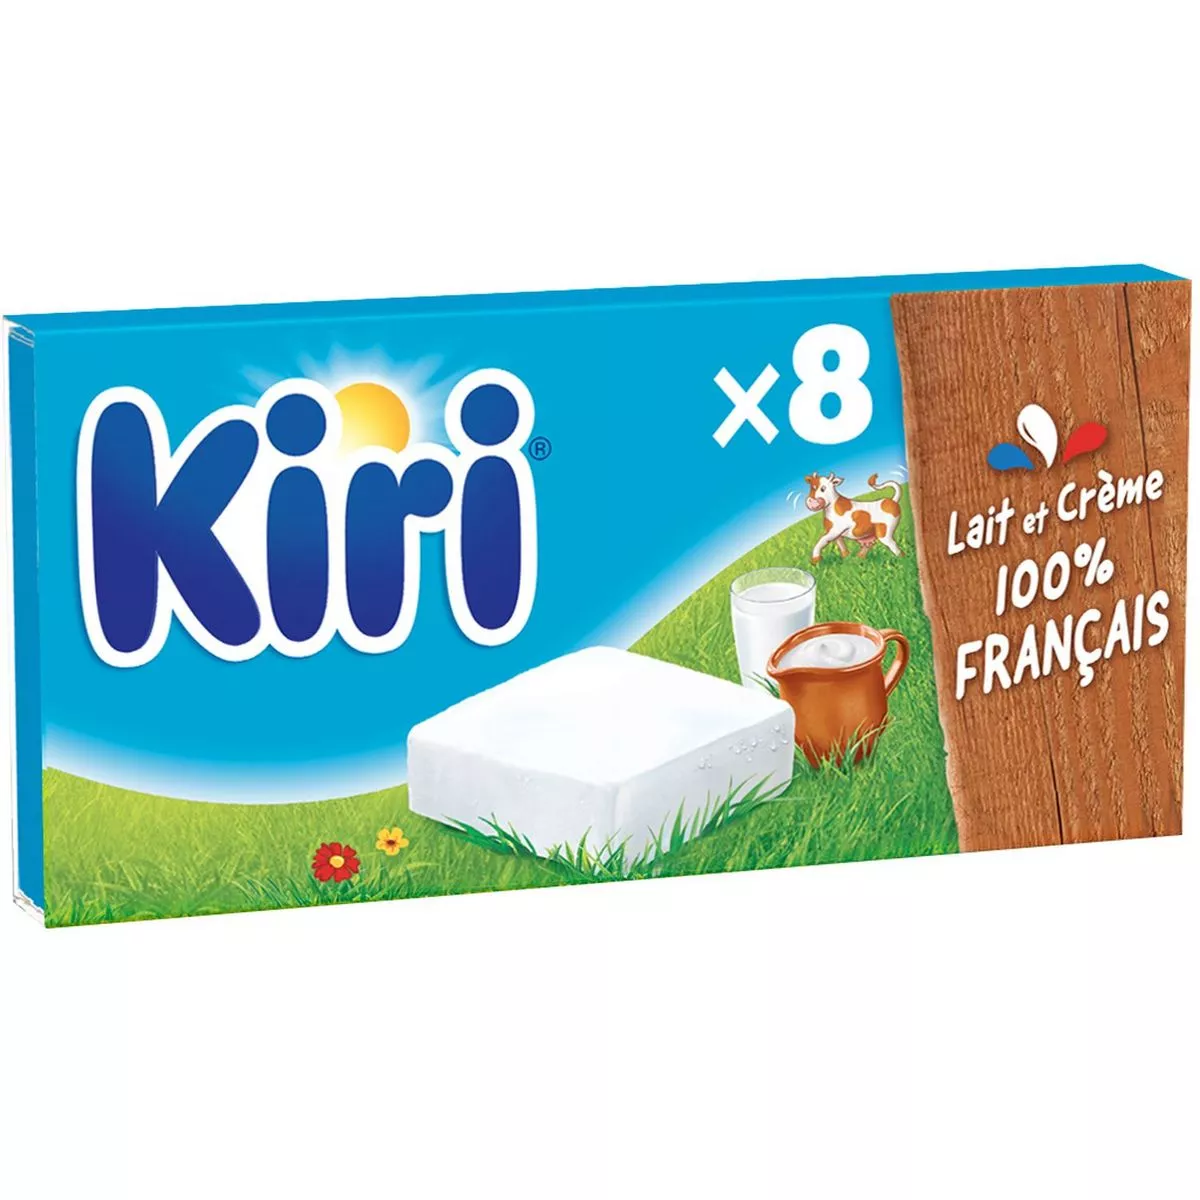 Kiri spread cheese portions 8x18g